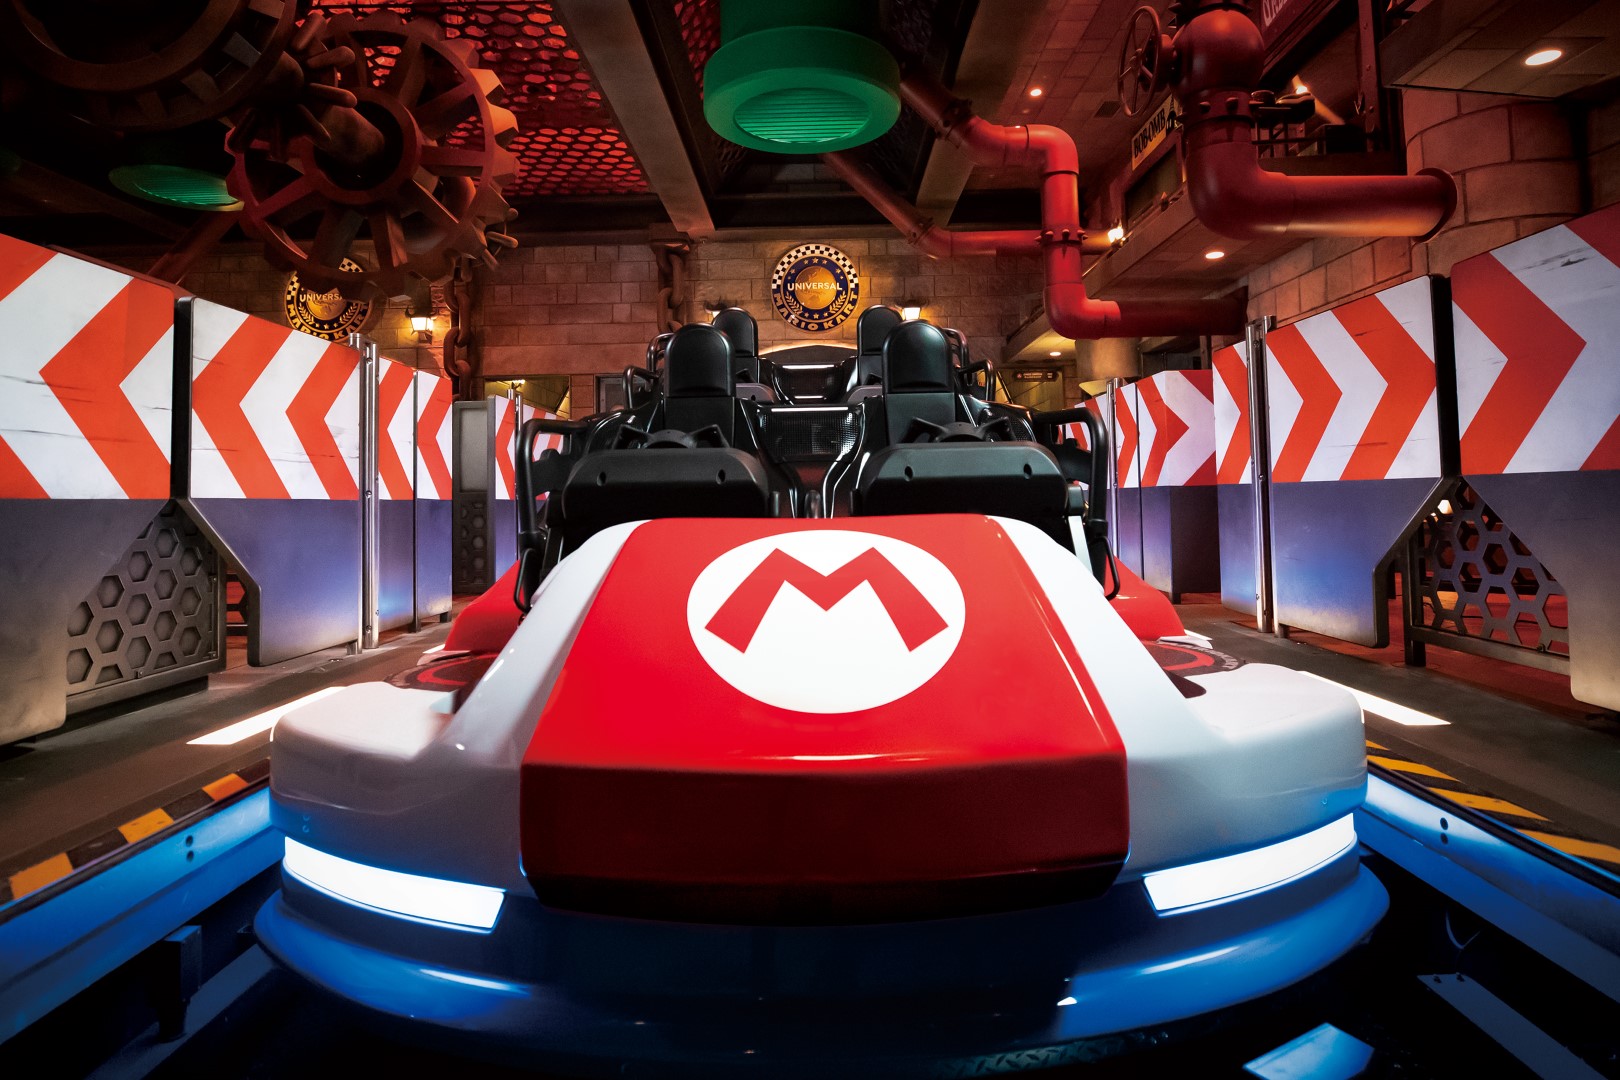 Usj スーパー ニンテンドー ワールド 2月4日オープン マリオカートのライドも初公開 Engadget 日本版